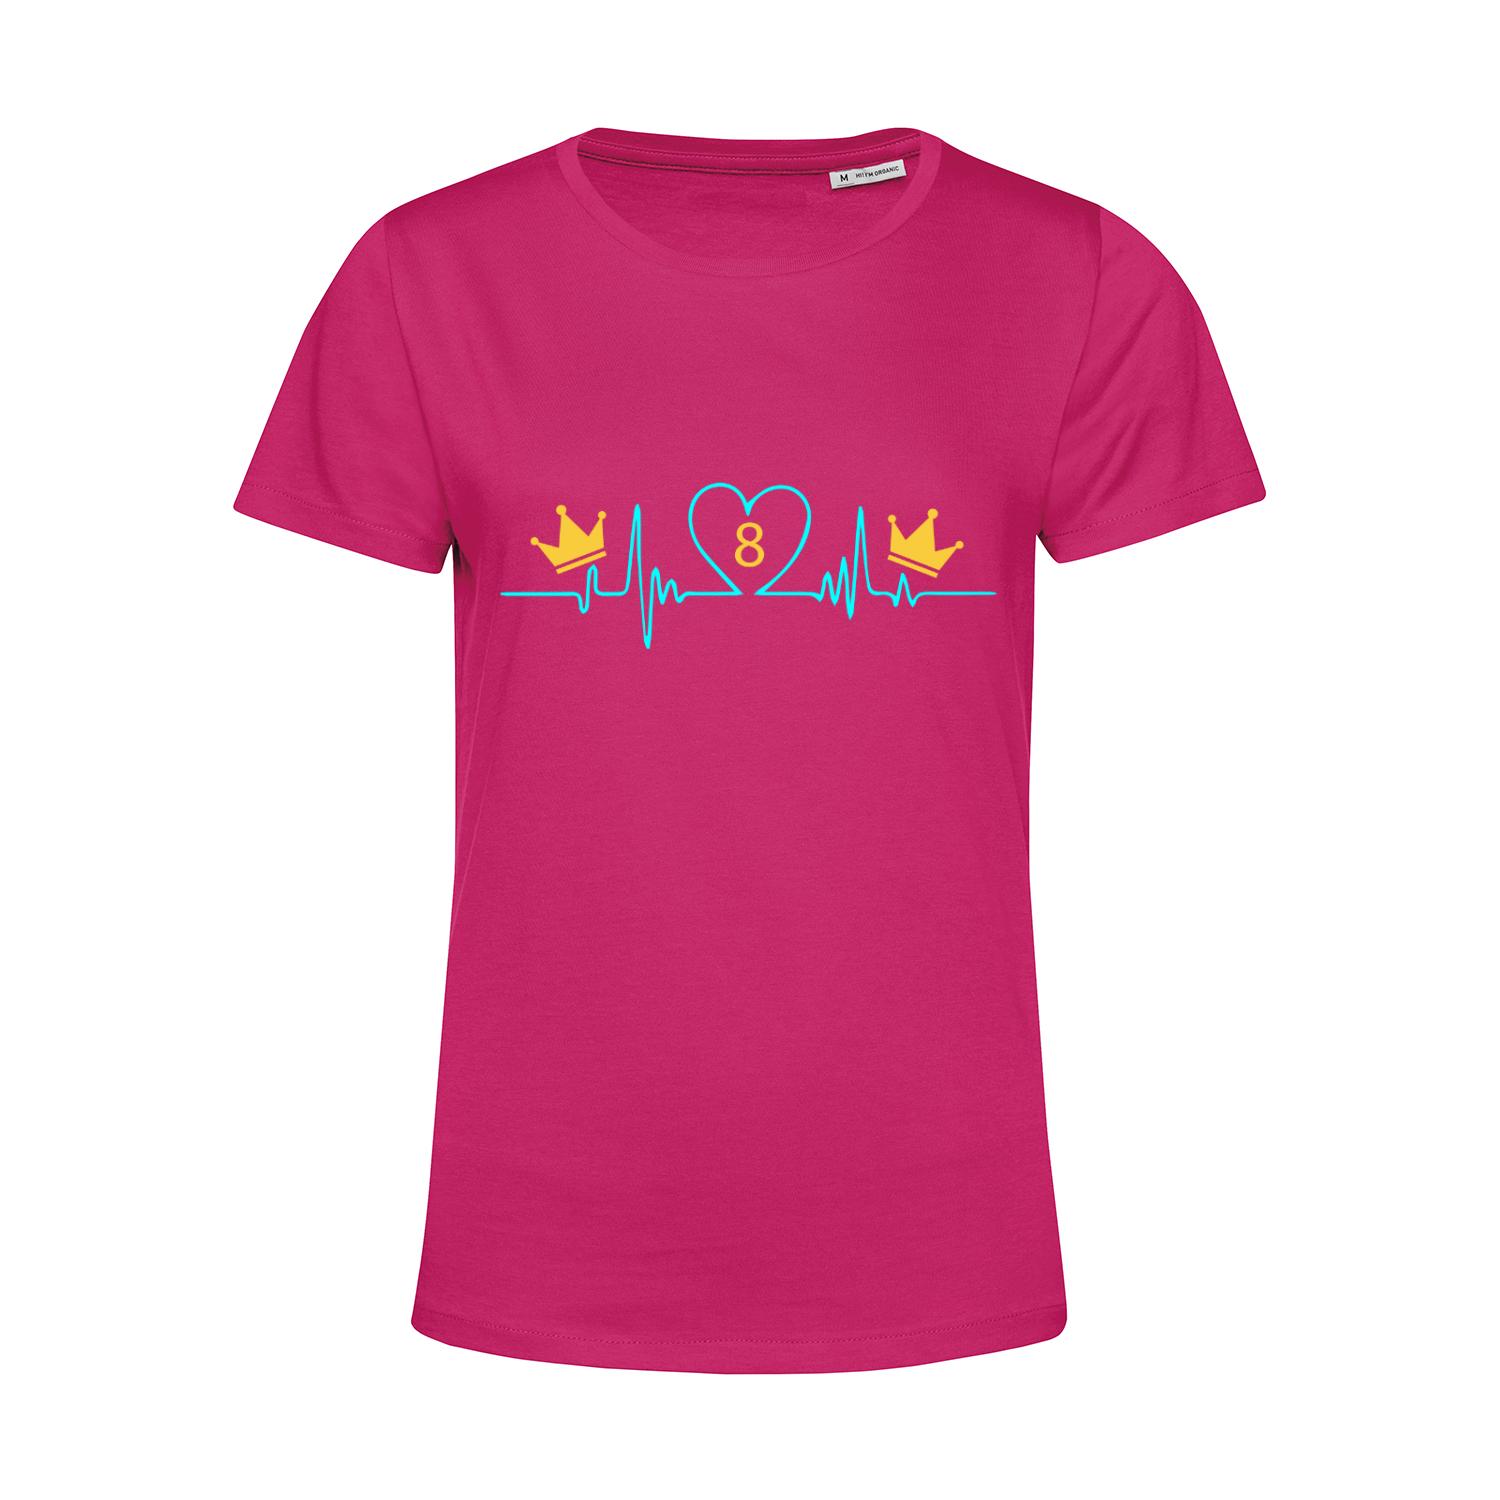 Nachhaltiges T-Shirt Damen Billard Heartbeat Crowns